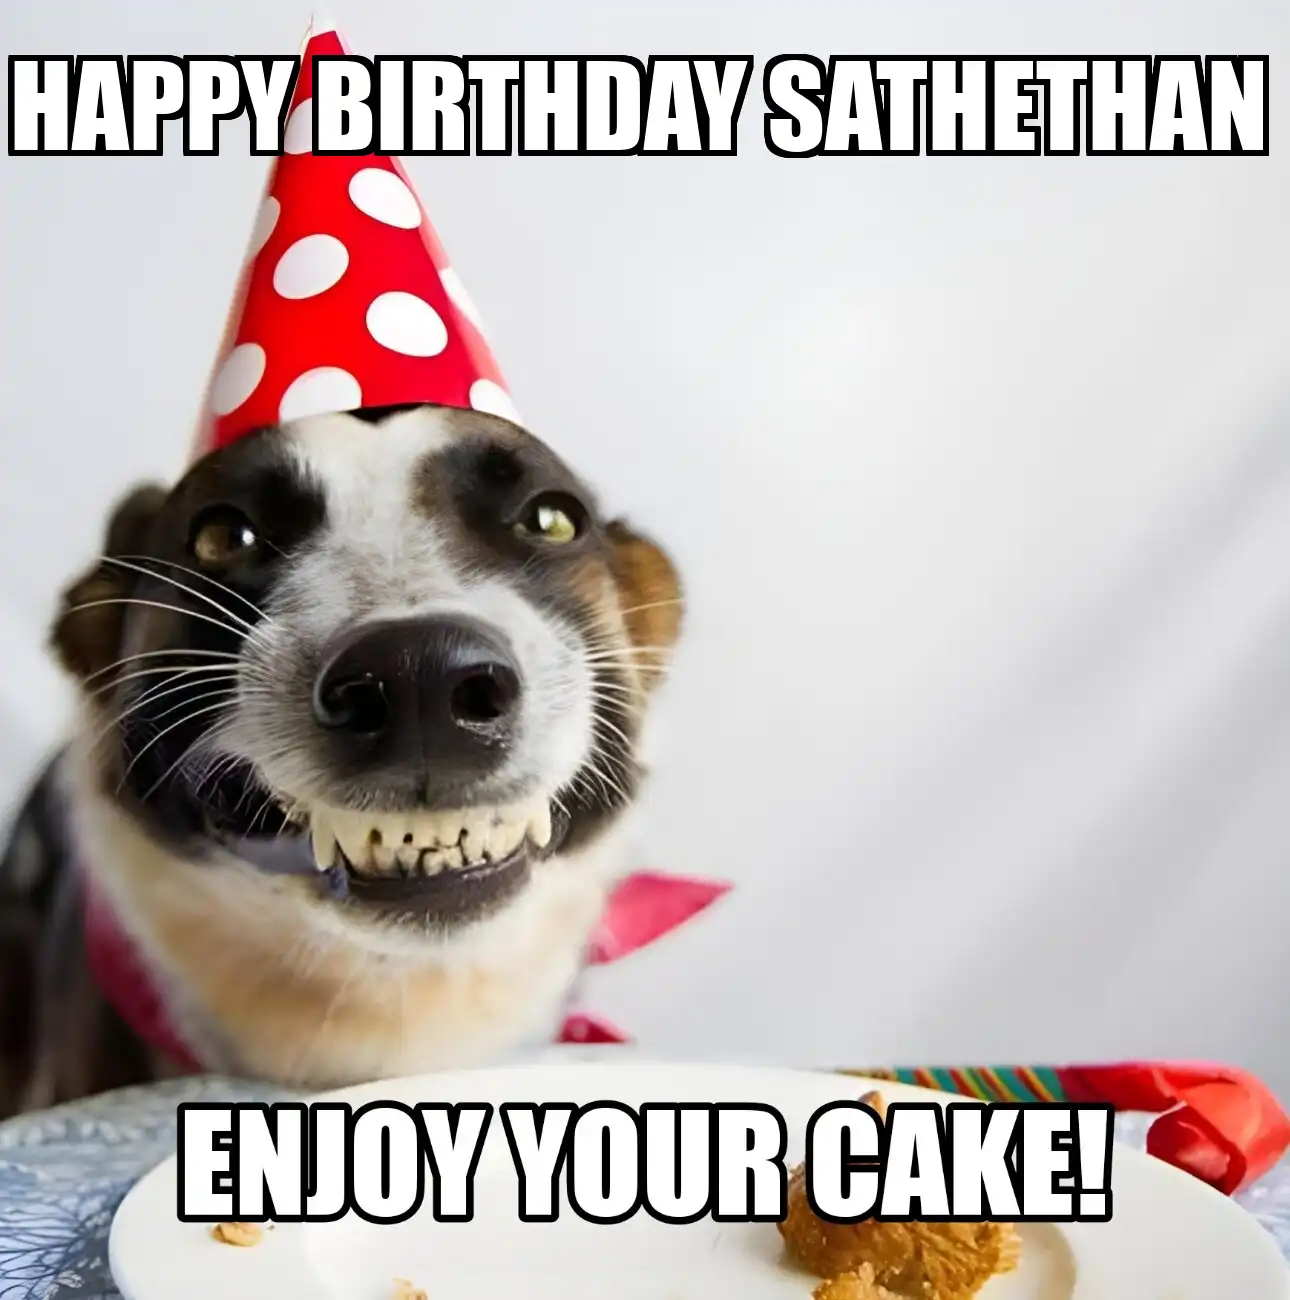 Happy Birthday Sathethan Enjoy Your Cake Dog Meme